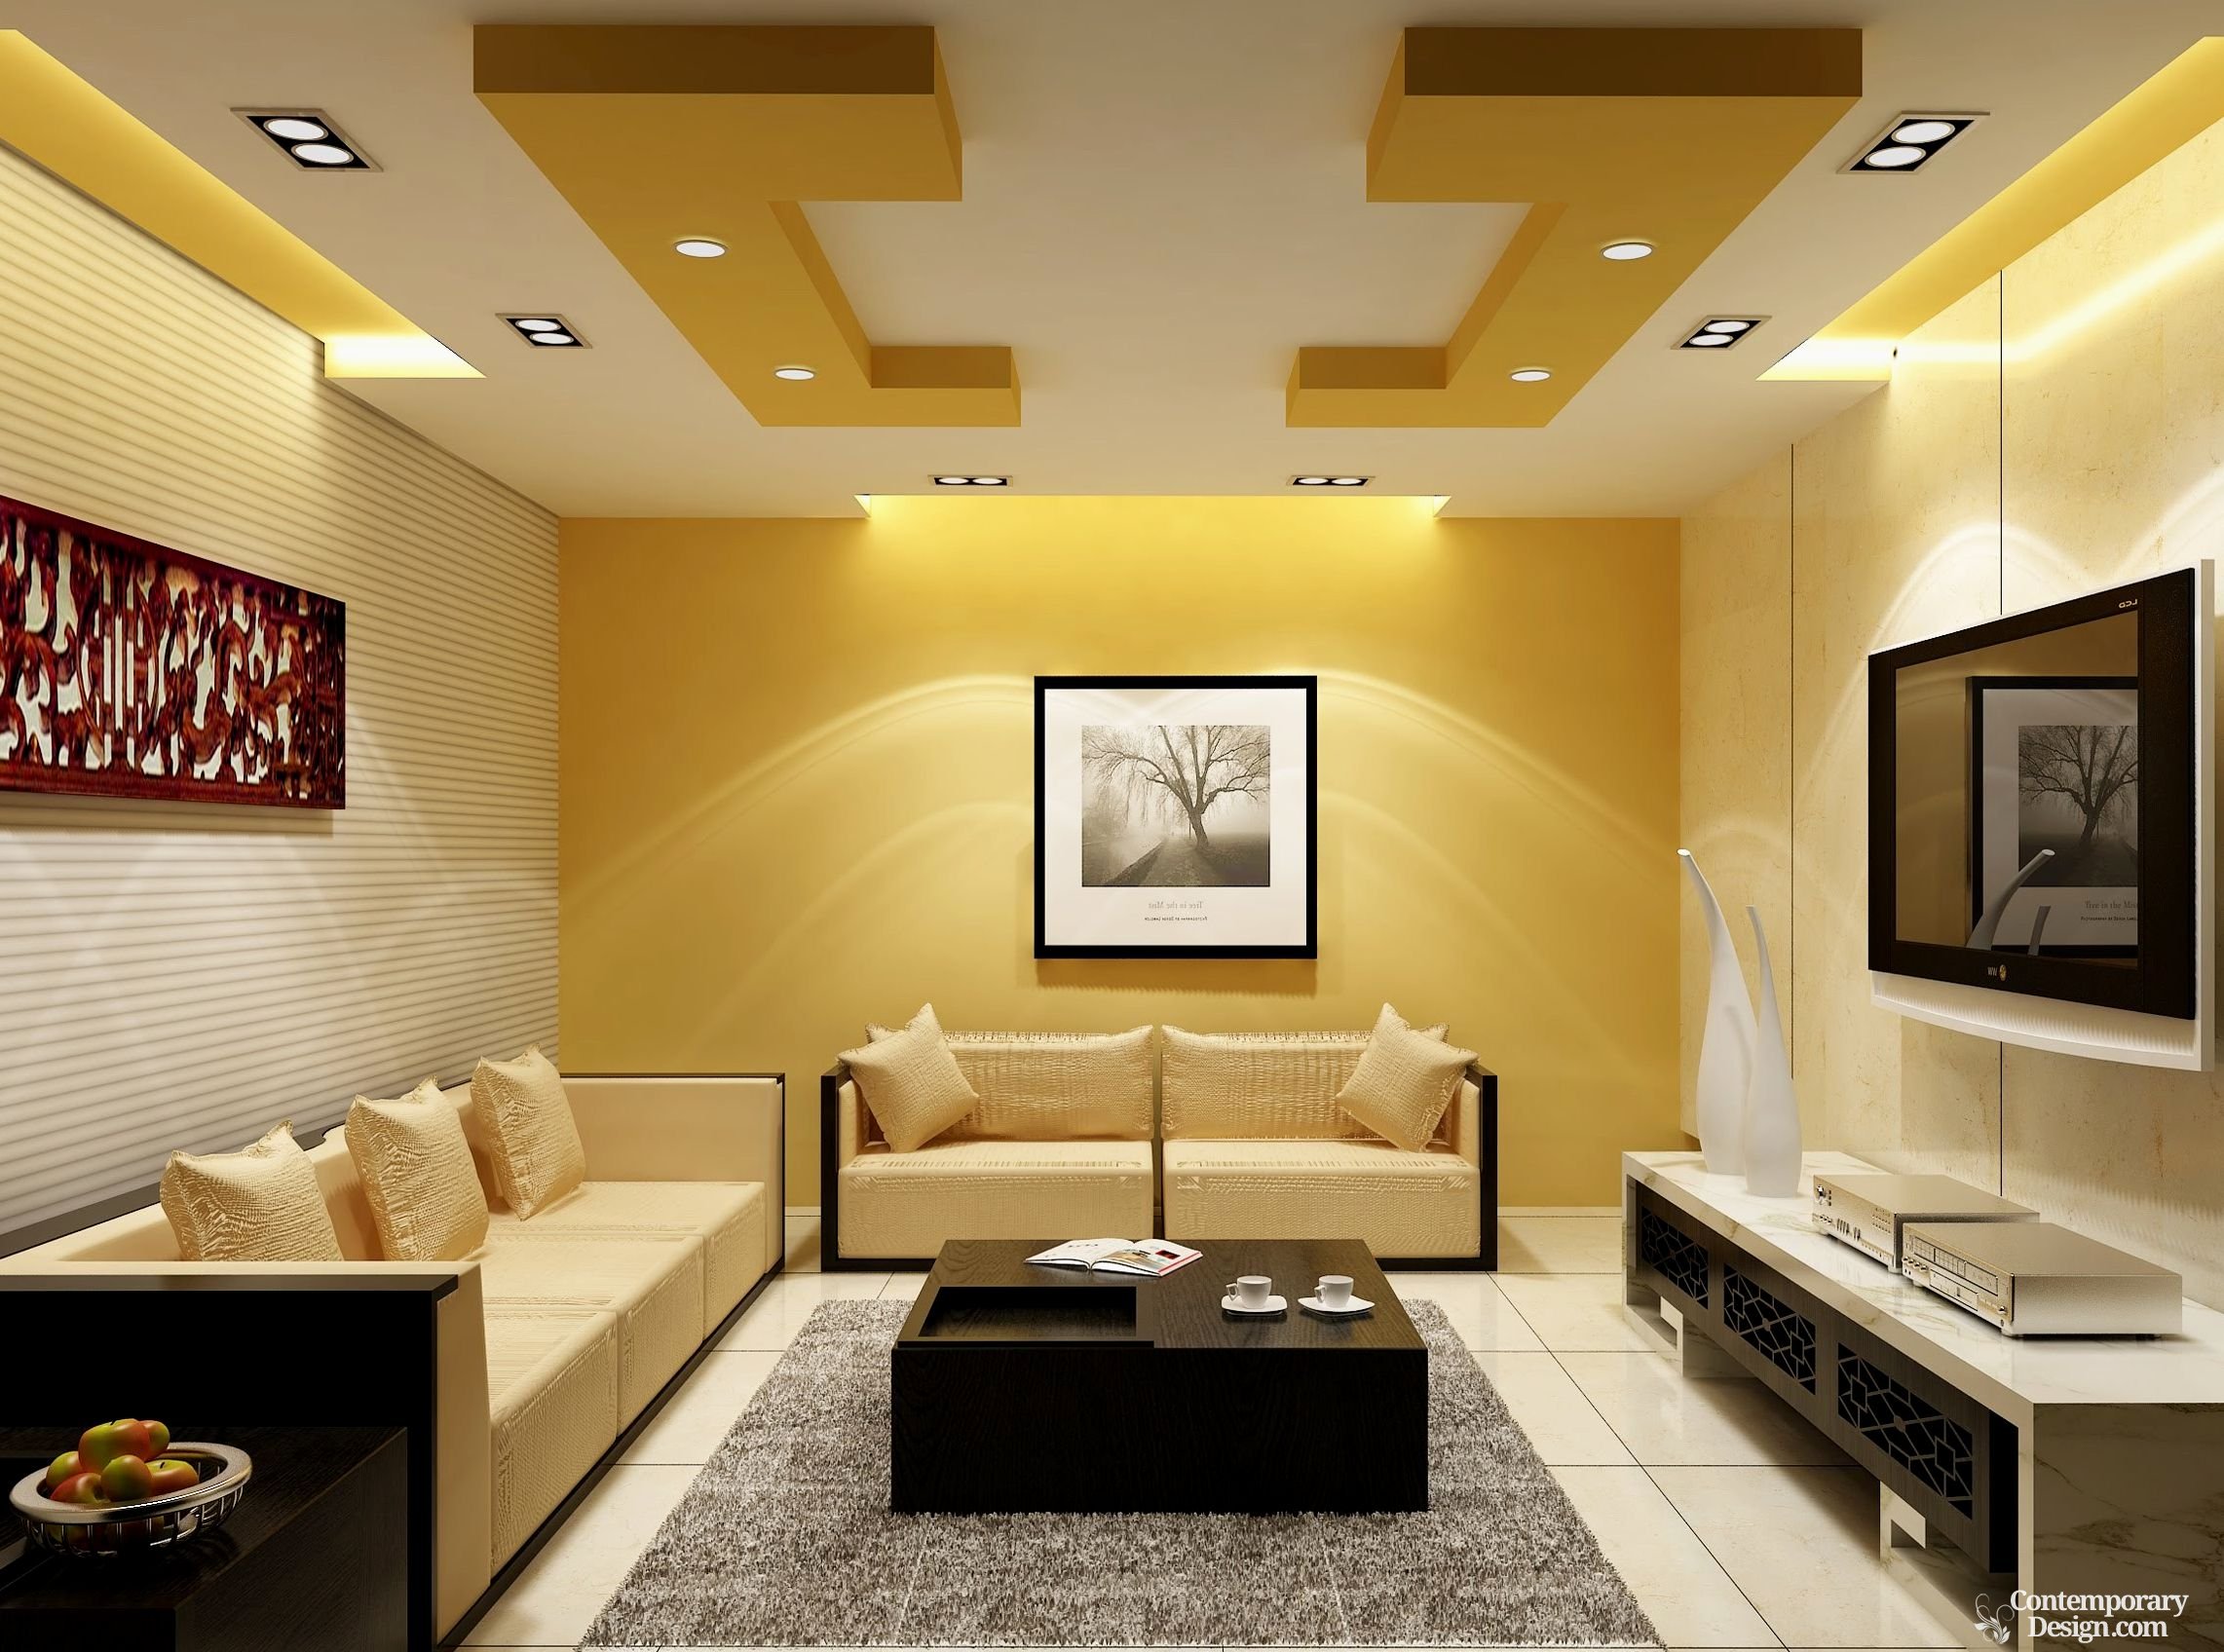 latest wallpaper designs for living room,living room,interior design,ceiling,room,wall